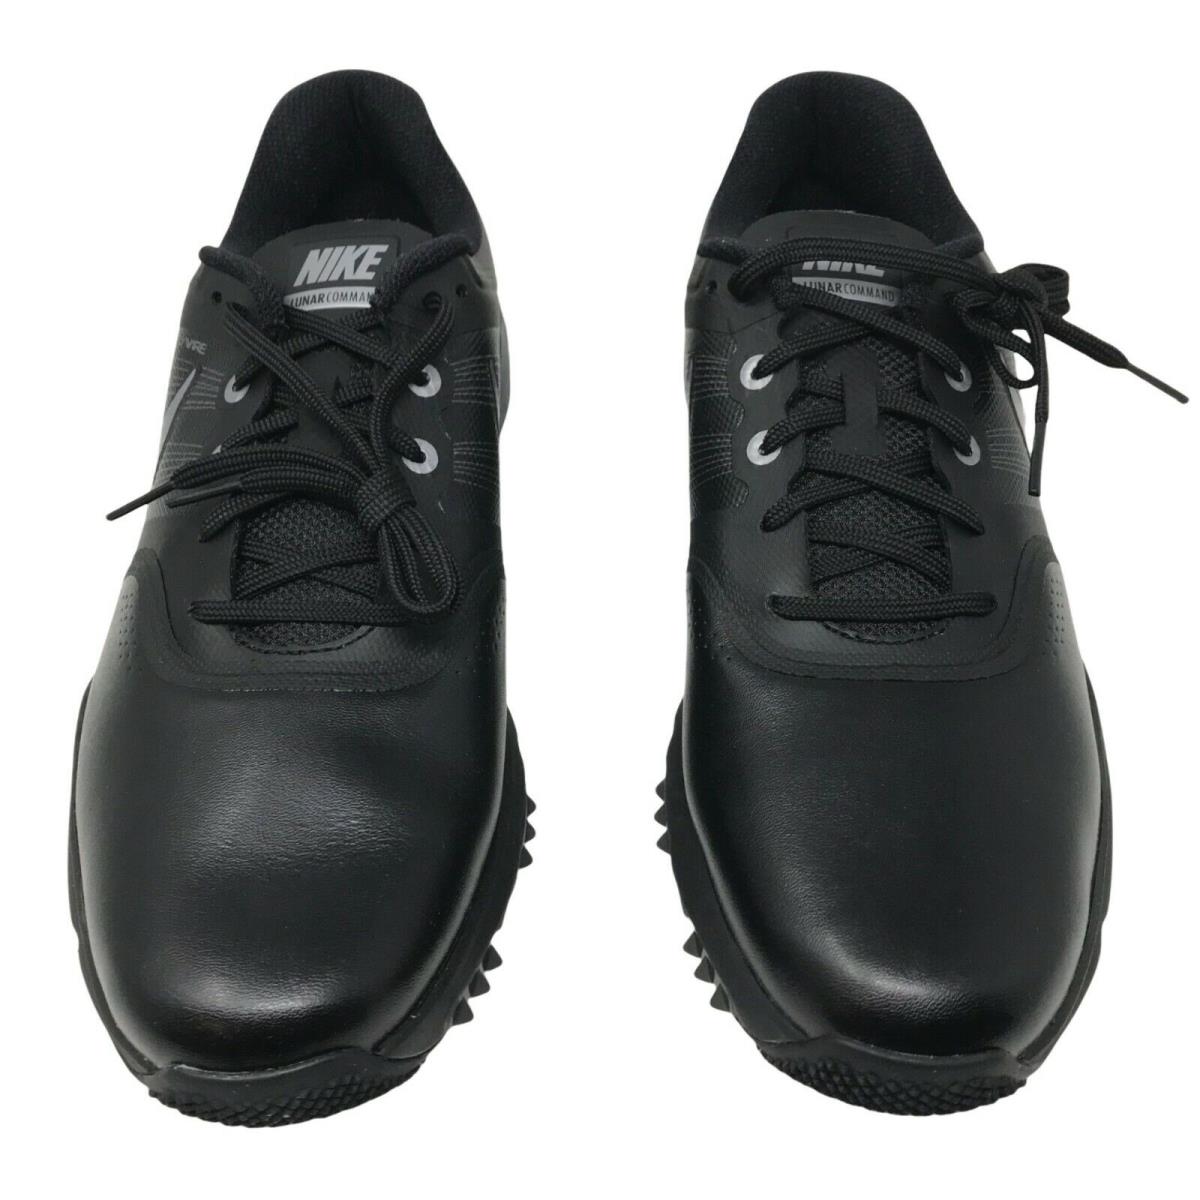 Nike Men`s Lunar Command Lightweight Golf Shoes Size 9.5 - Black